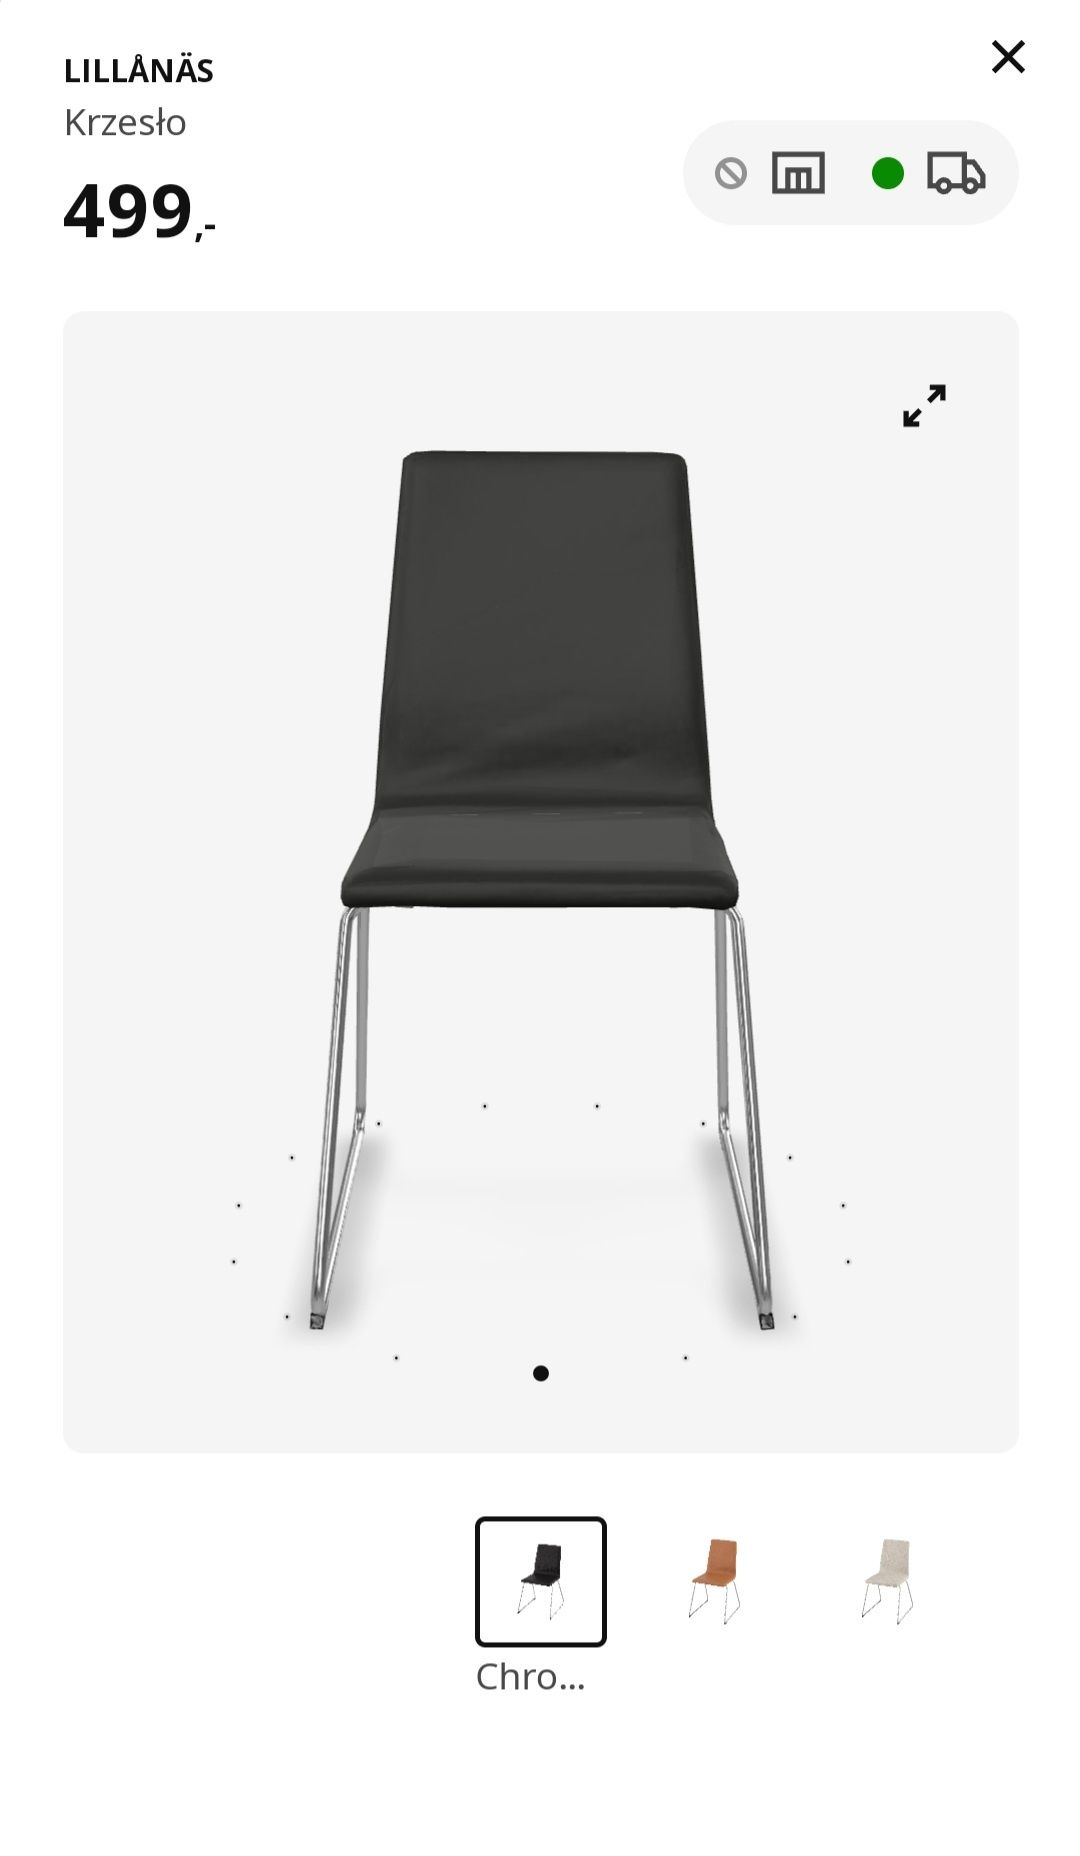 Krzesła Lillanas Ikea 3 sztuki